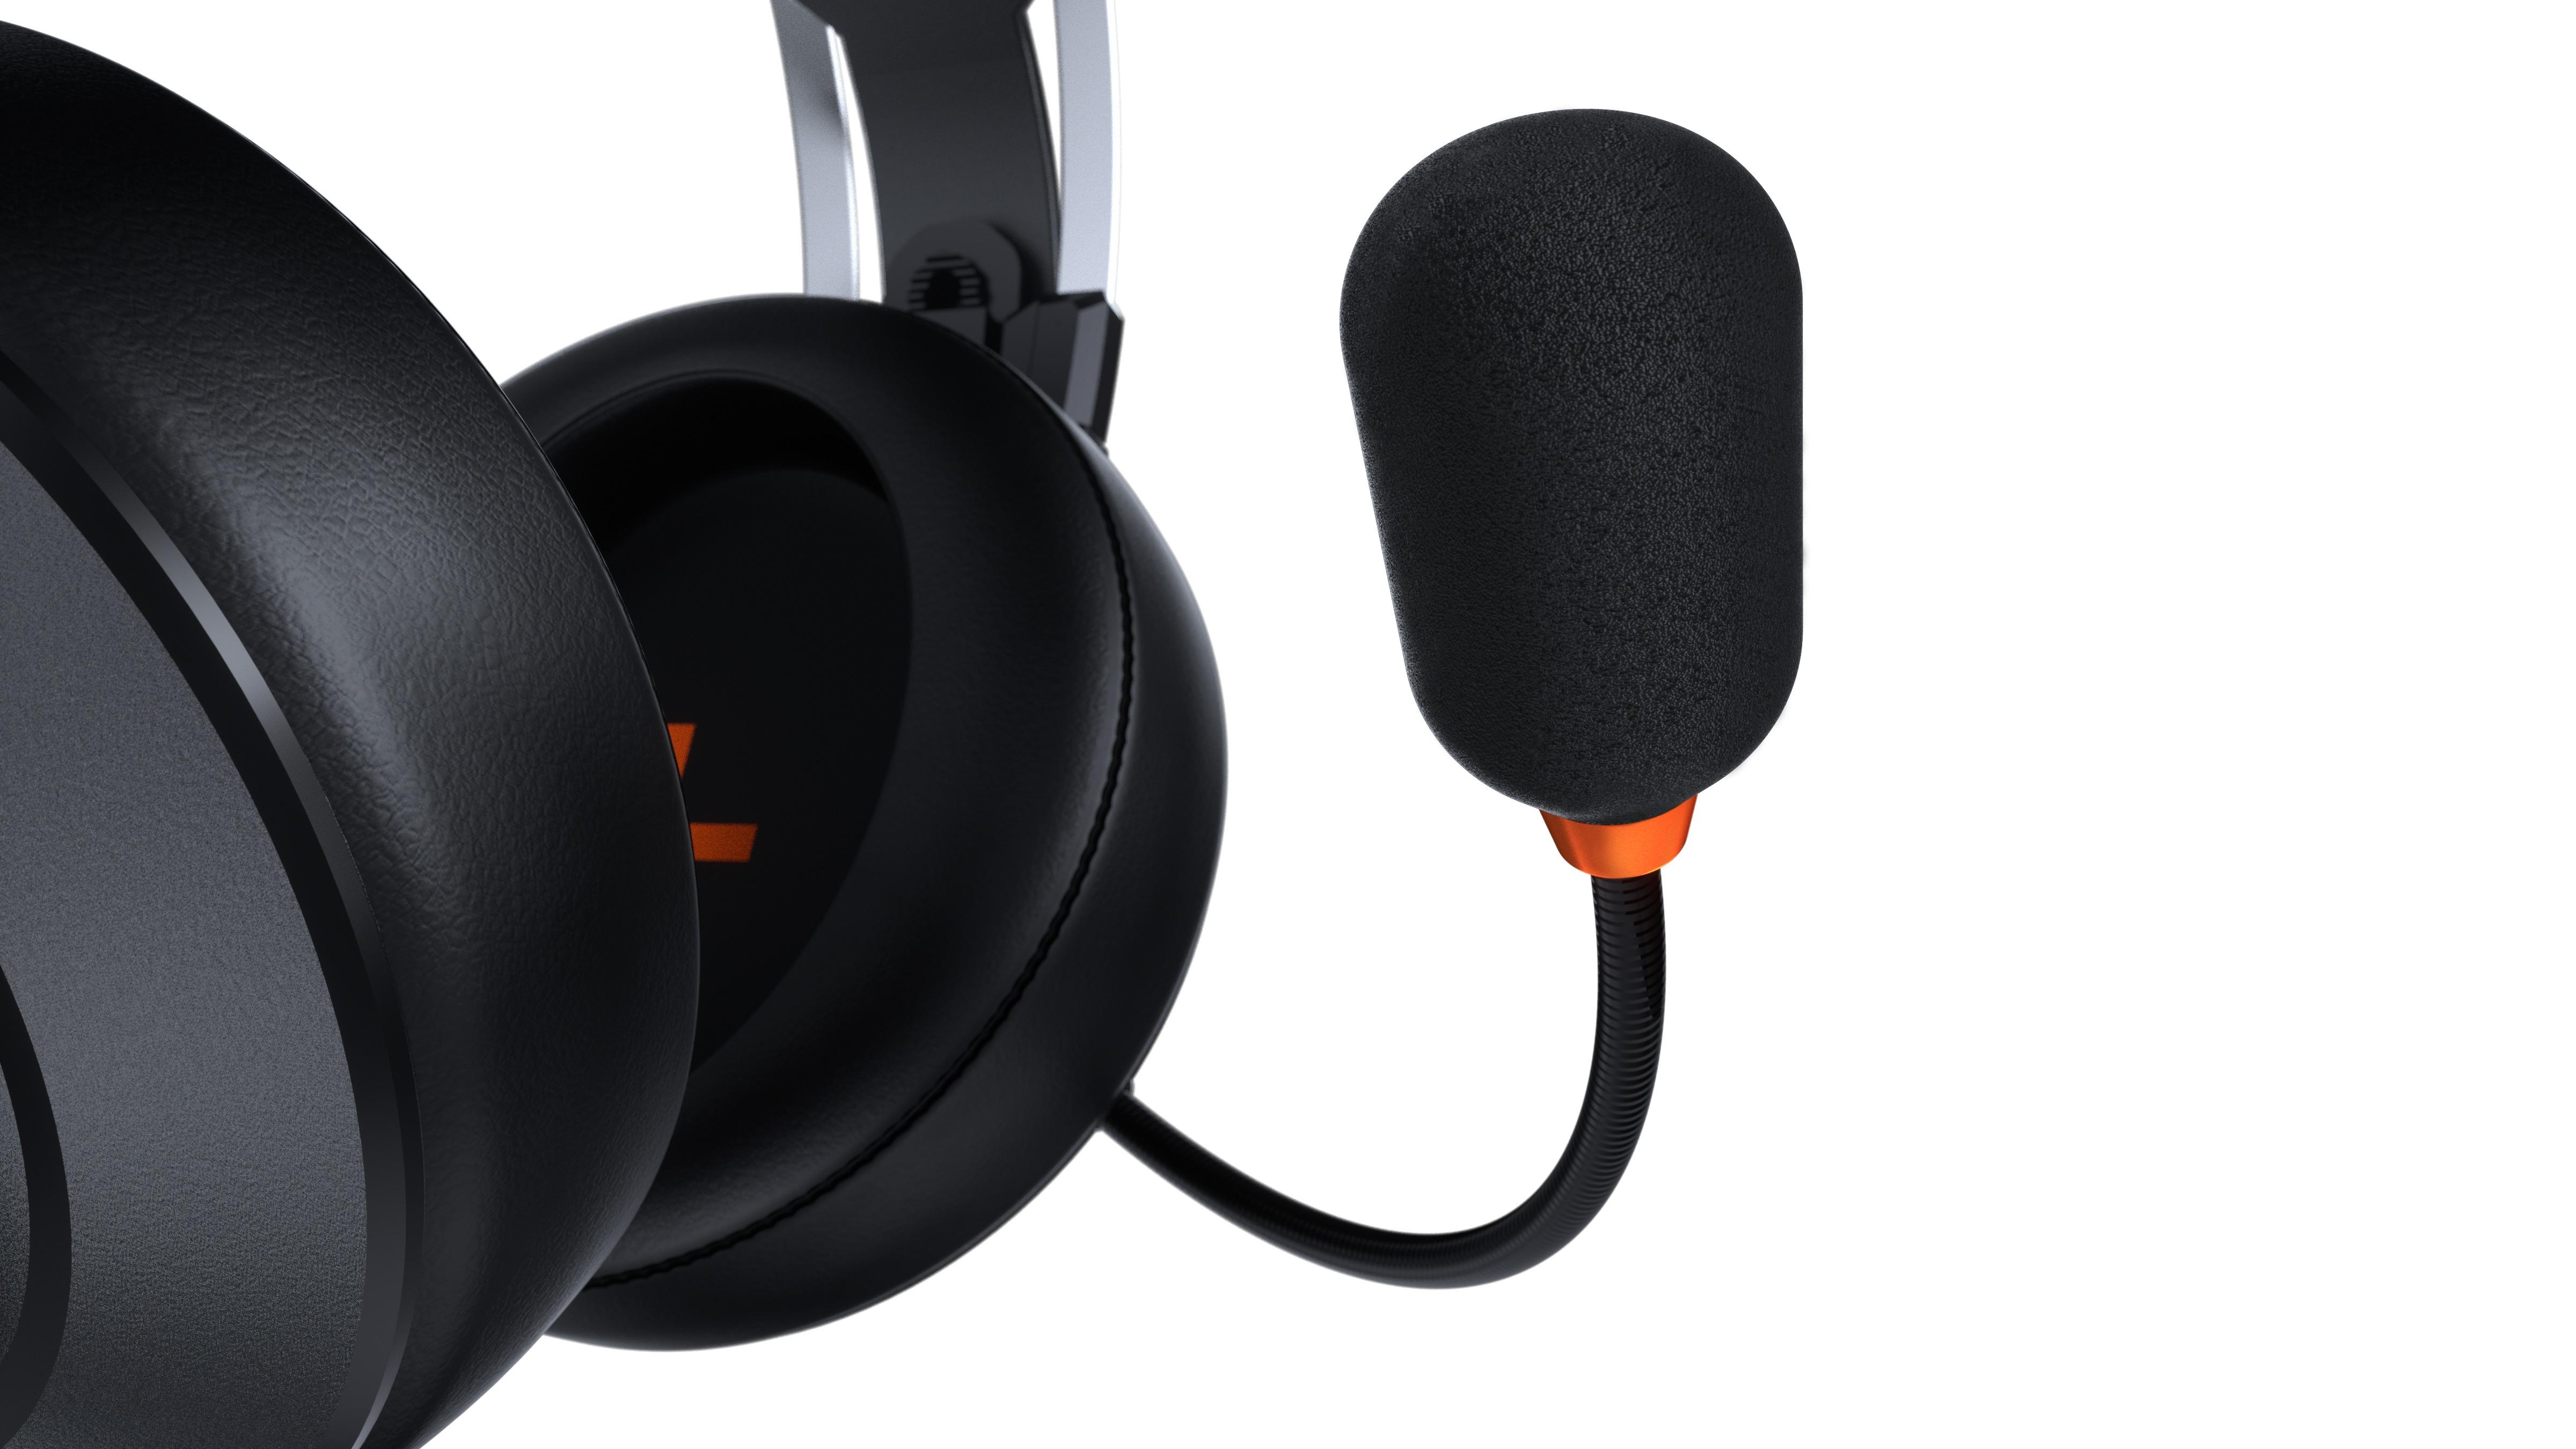 COUGAR VM410 TOURNAMENT, Over-ear schwarz-orange Gaming Headset